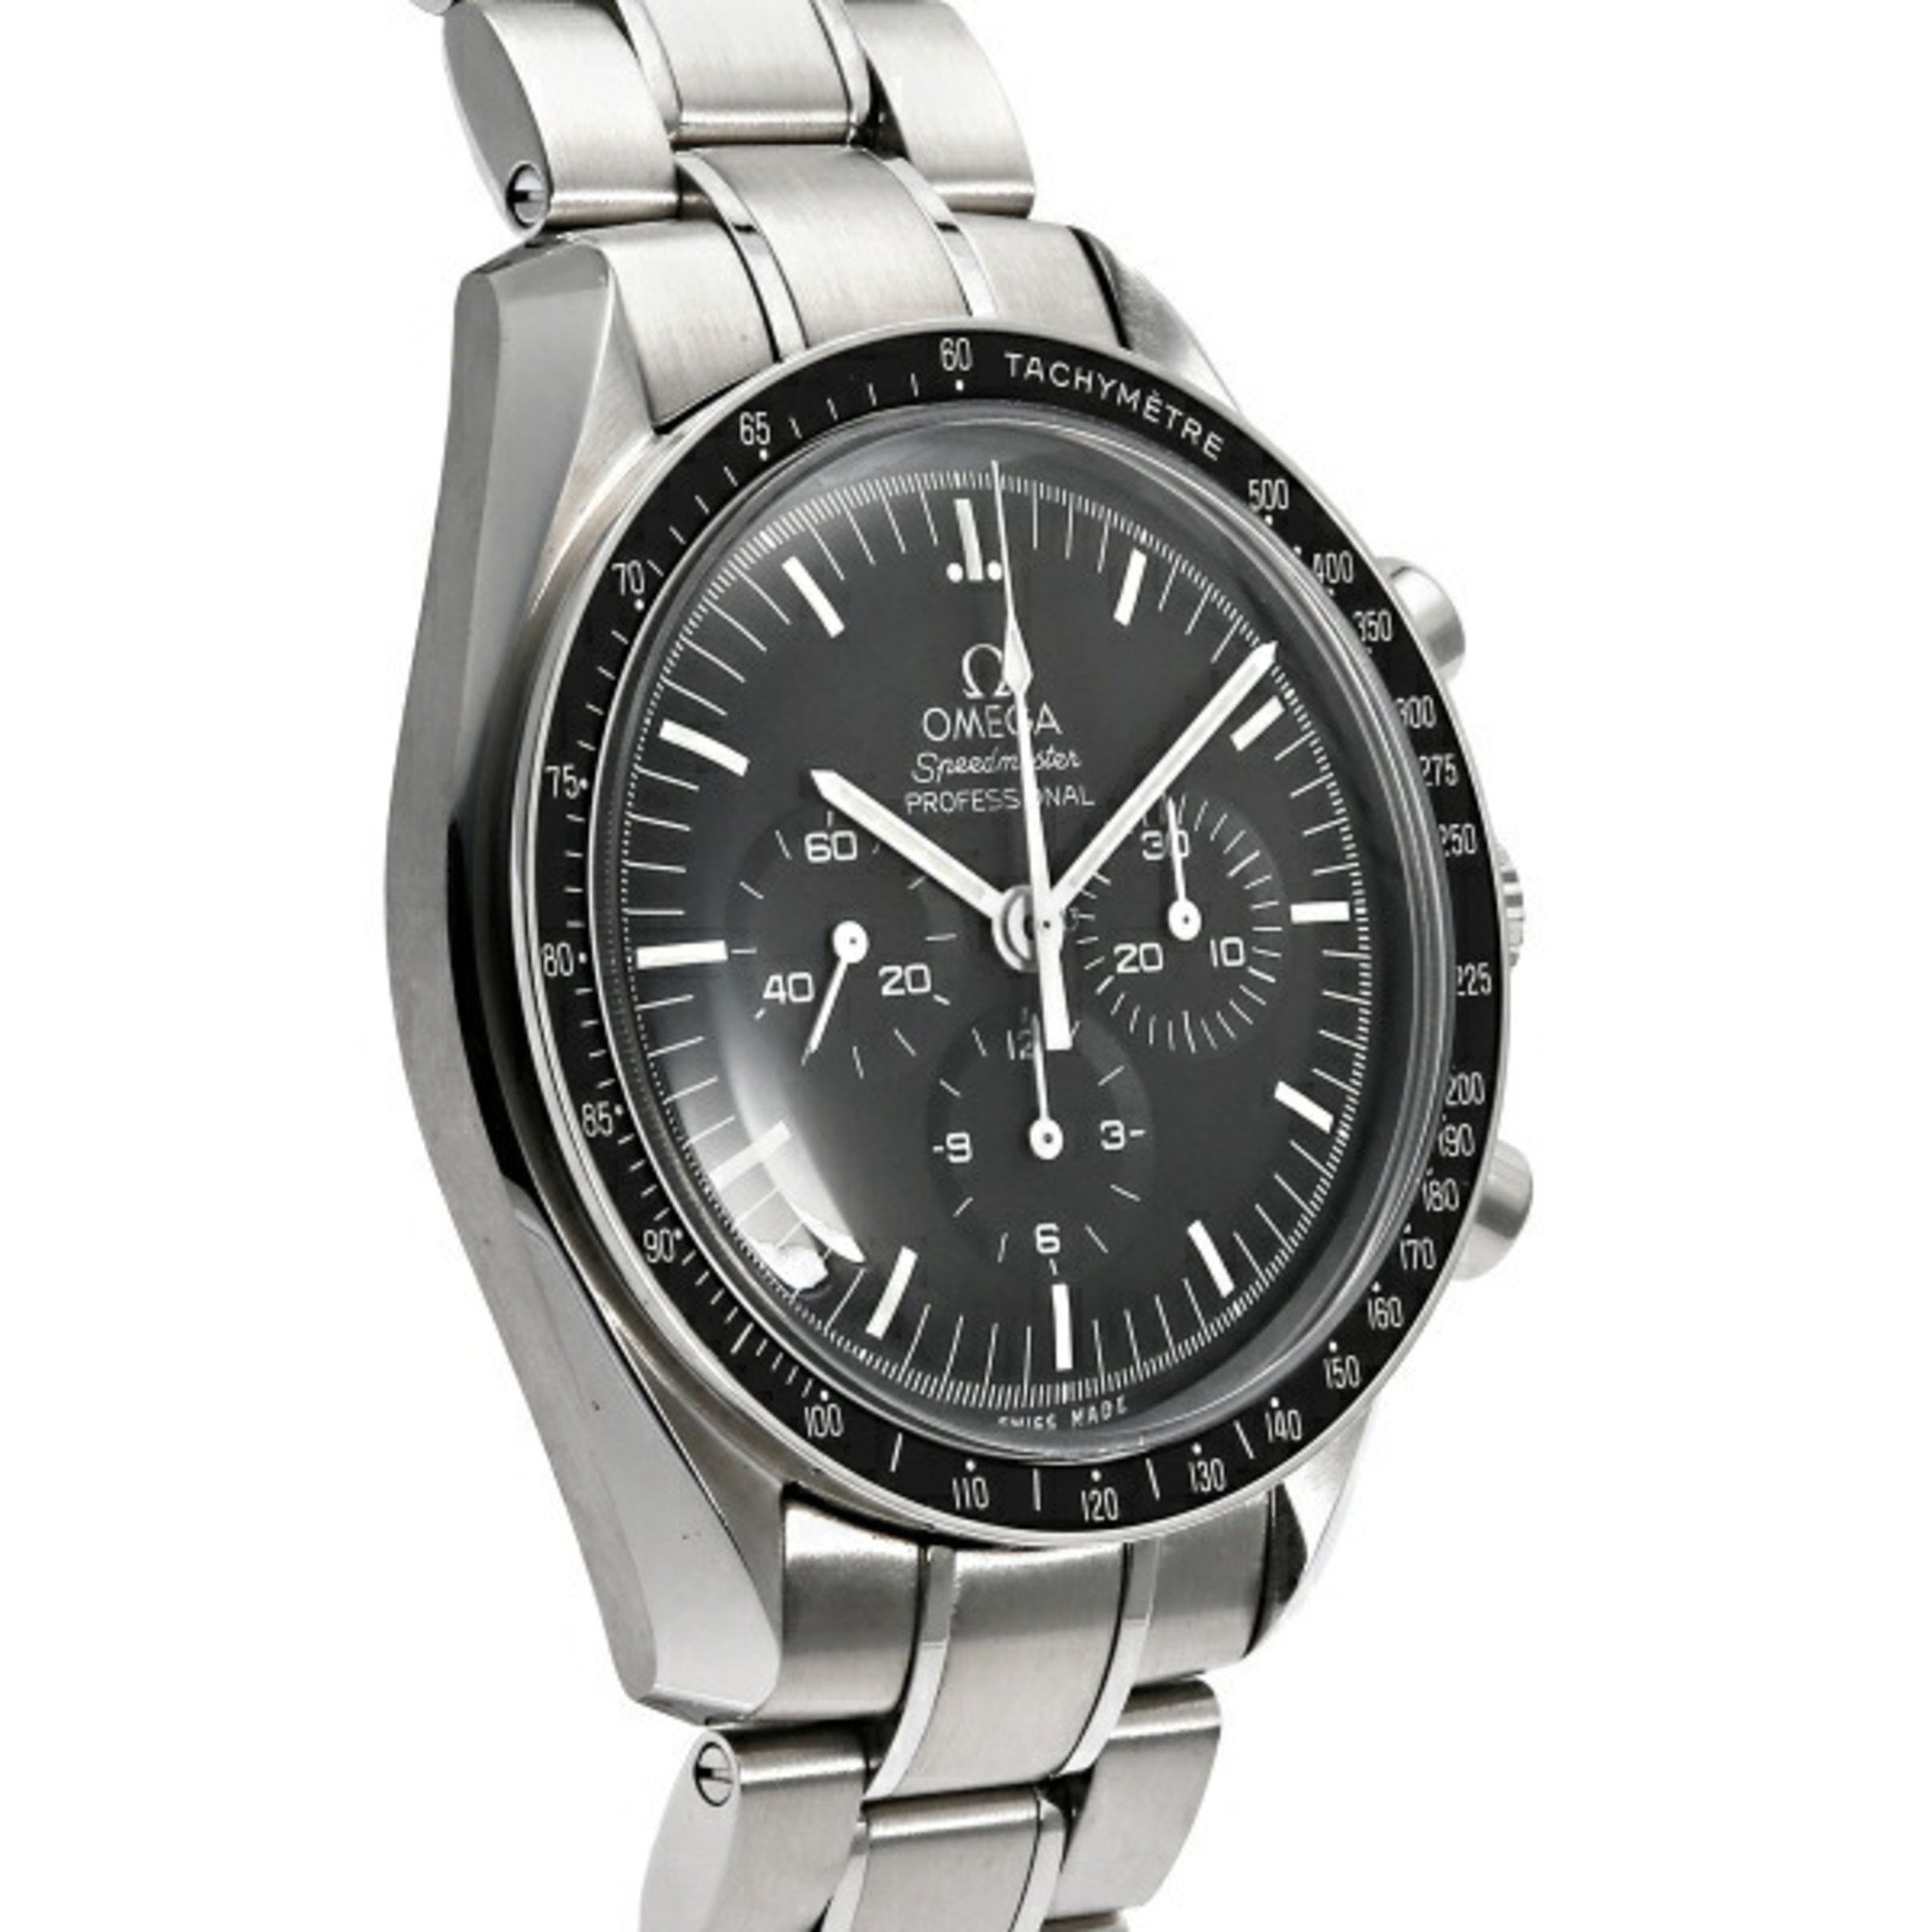 OMEGA Speedmaster Professional Moonwatch 311.30.42.30.01.005 Black Dial Men's Watch